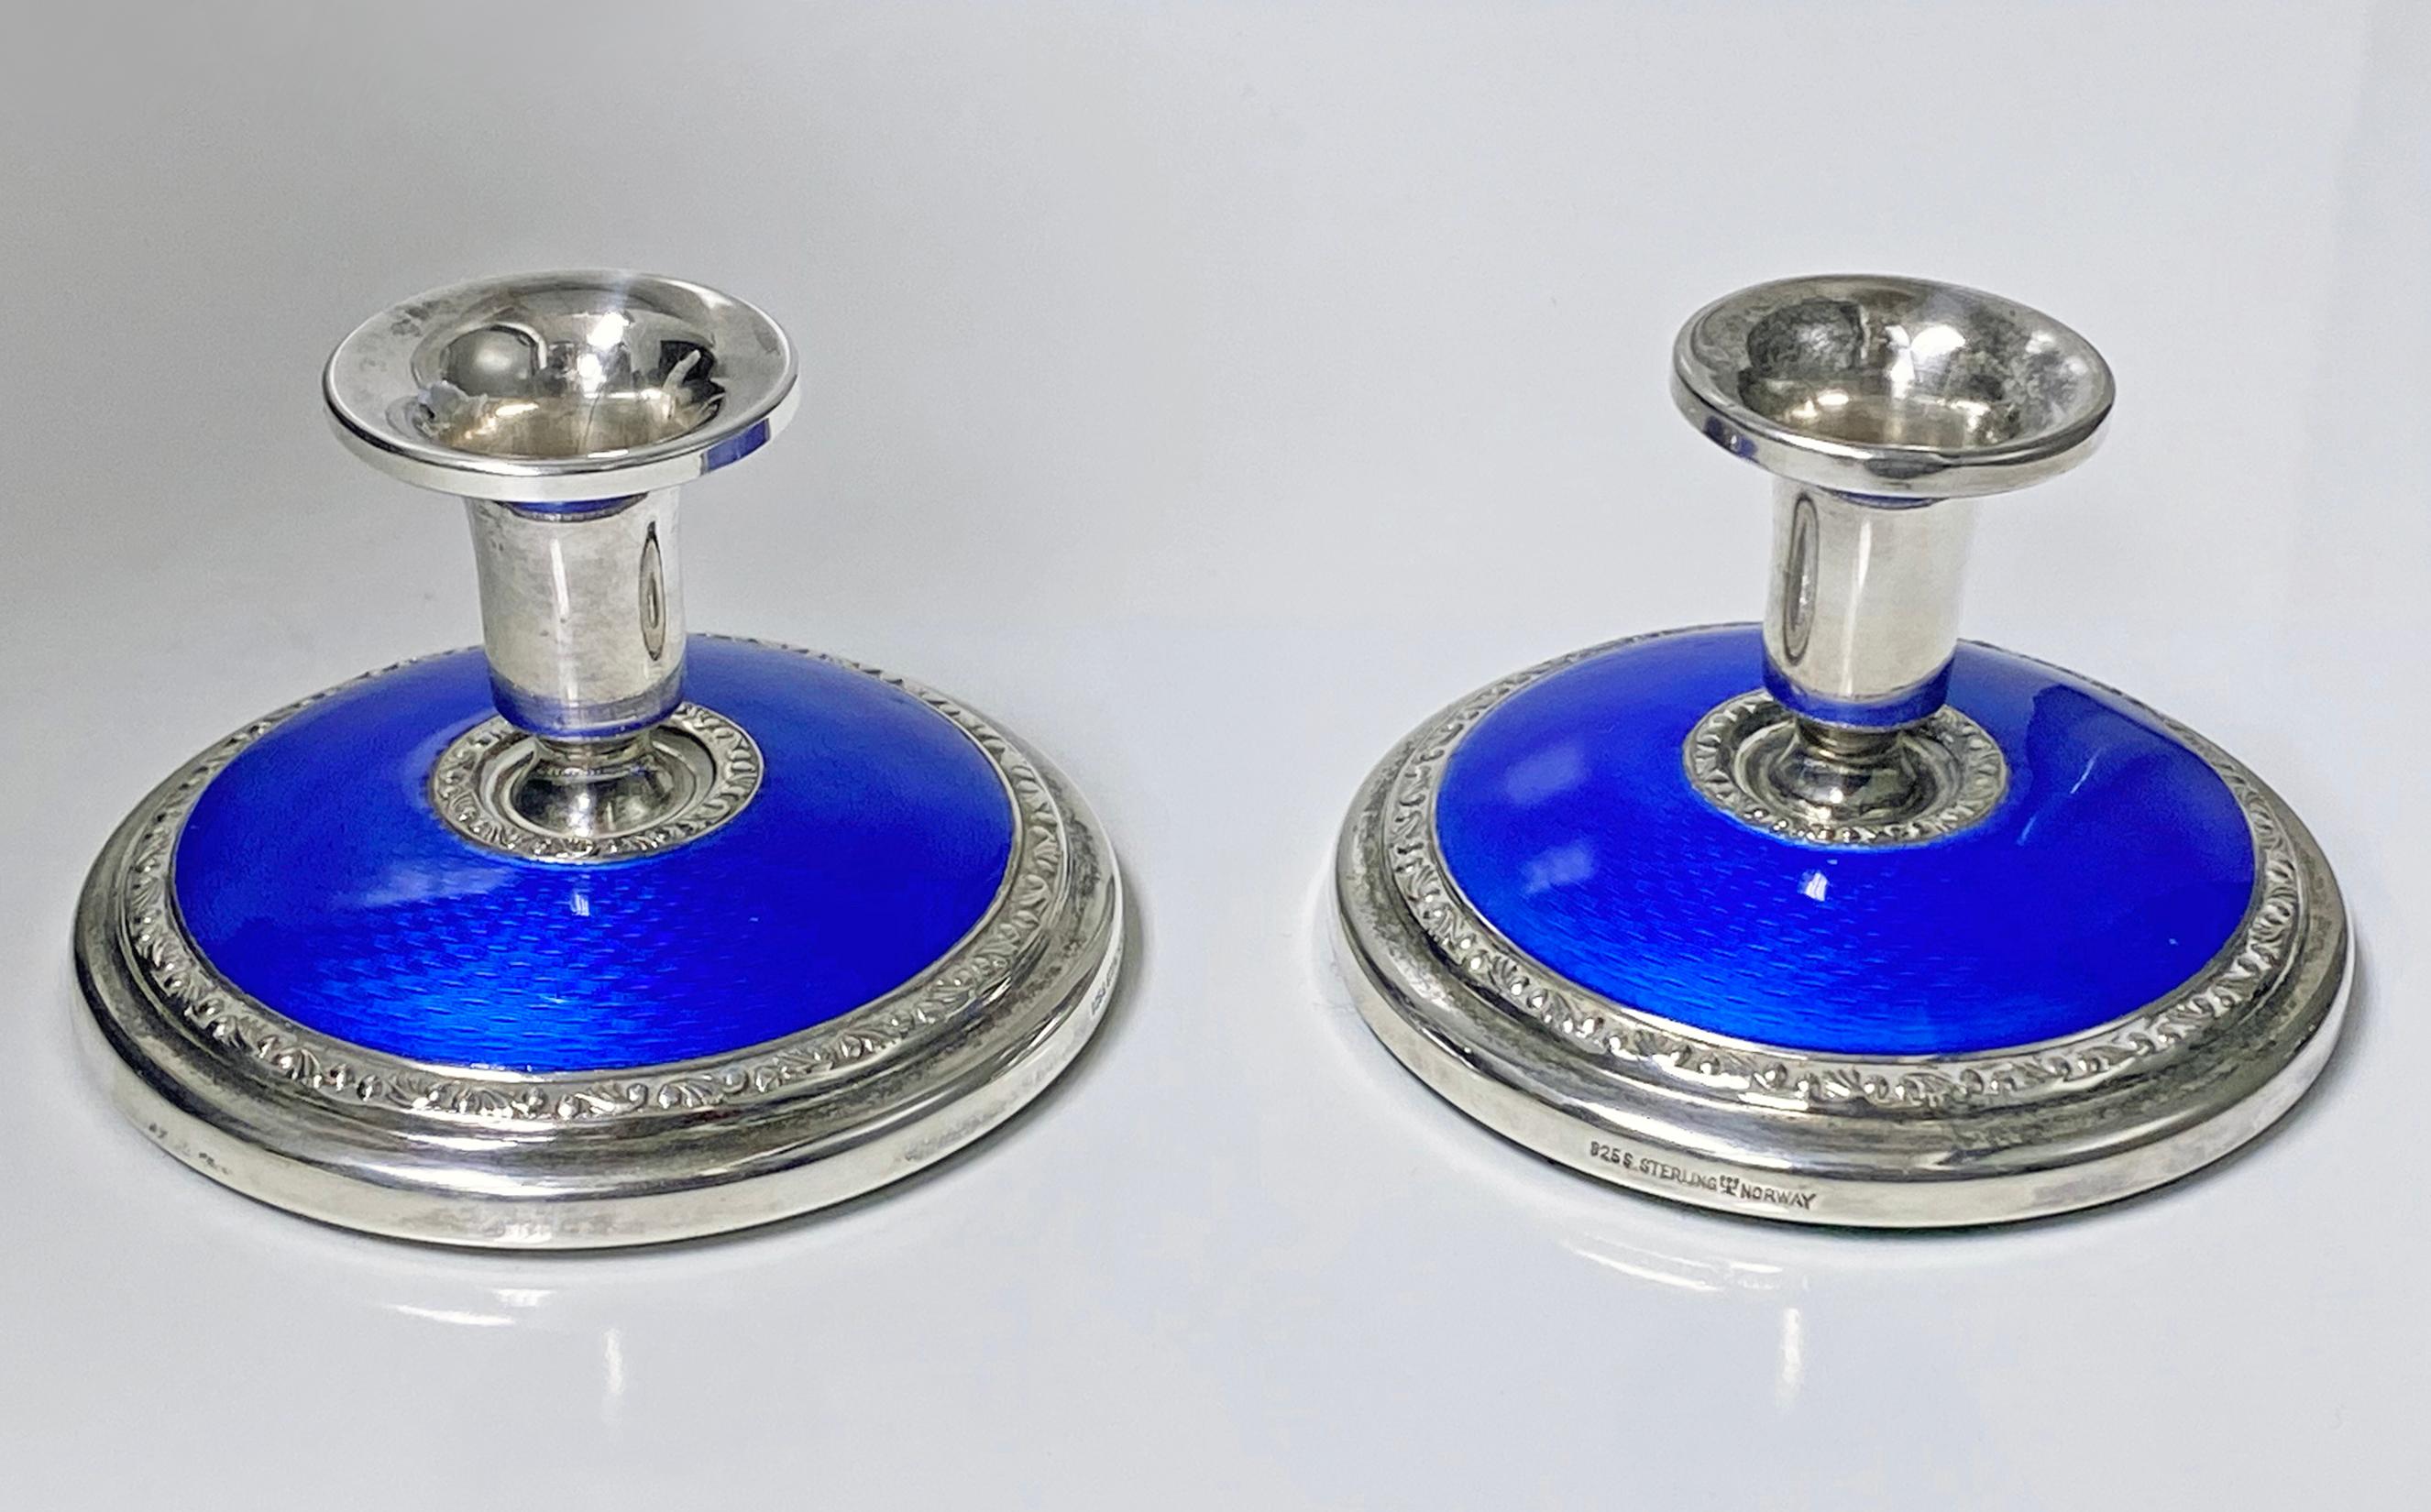 Pair of Art Deco sterling silver enamel travel desk candlesticks, Norway, circa1930, Norsk Filigranskfabrikk. The candlesticks with vibrant blue guilloche enamel. Dimensions: 2